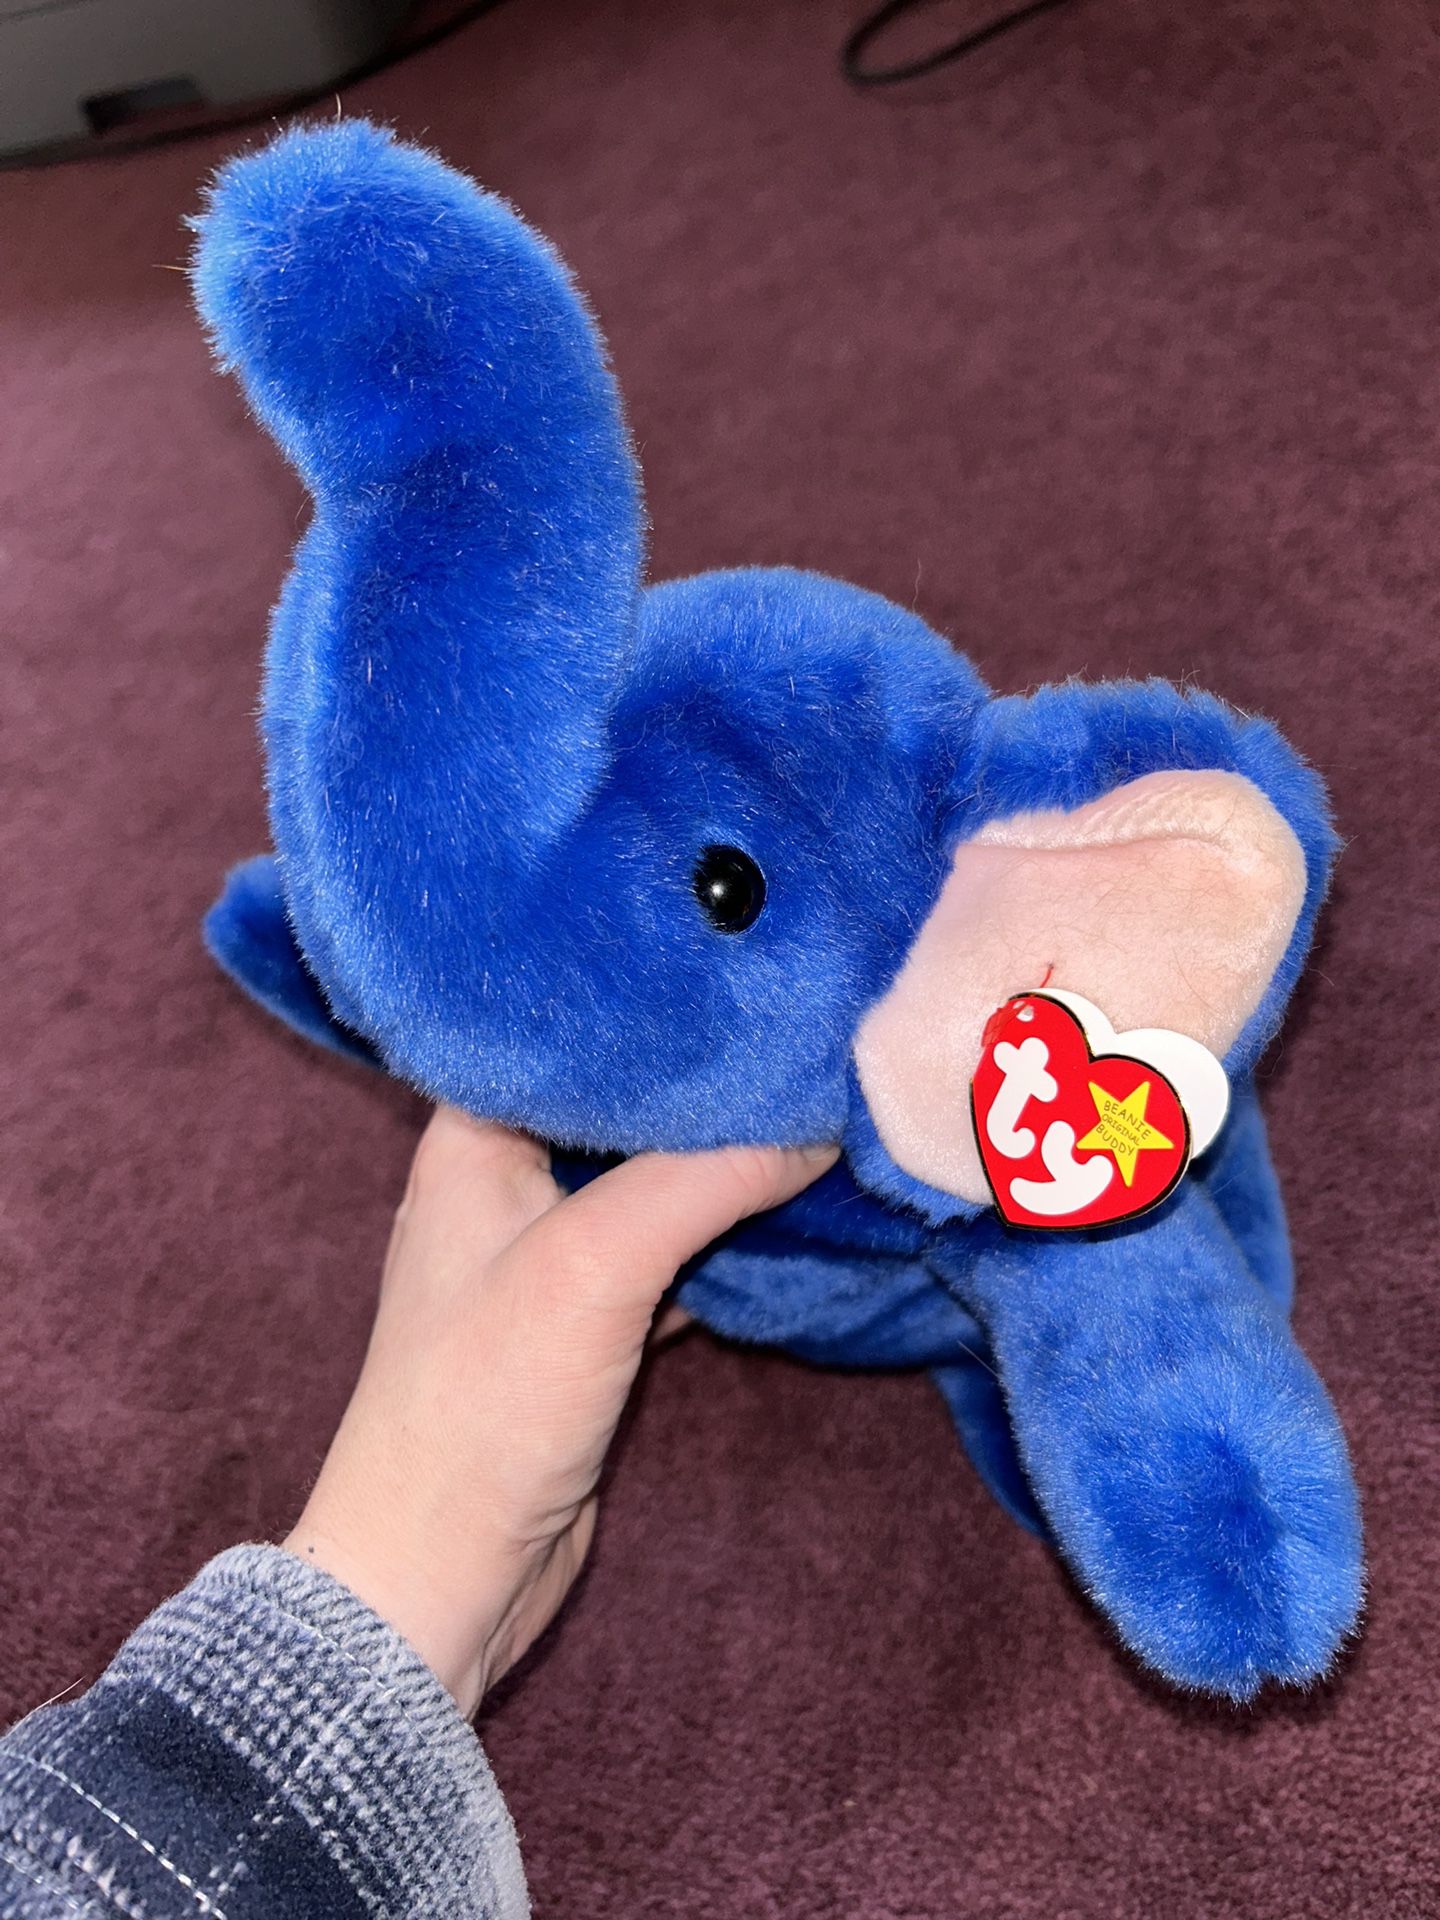 "Peanut" Royal Blue Elephant TY Rare Beanie Buddy 1998 Collectors Item 